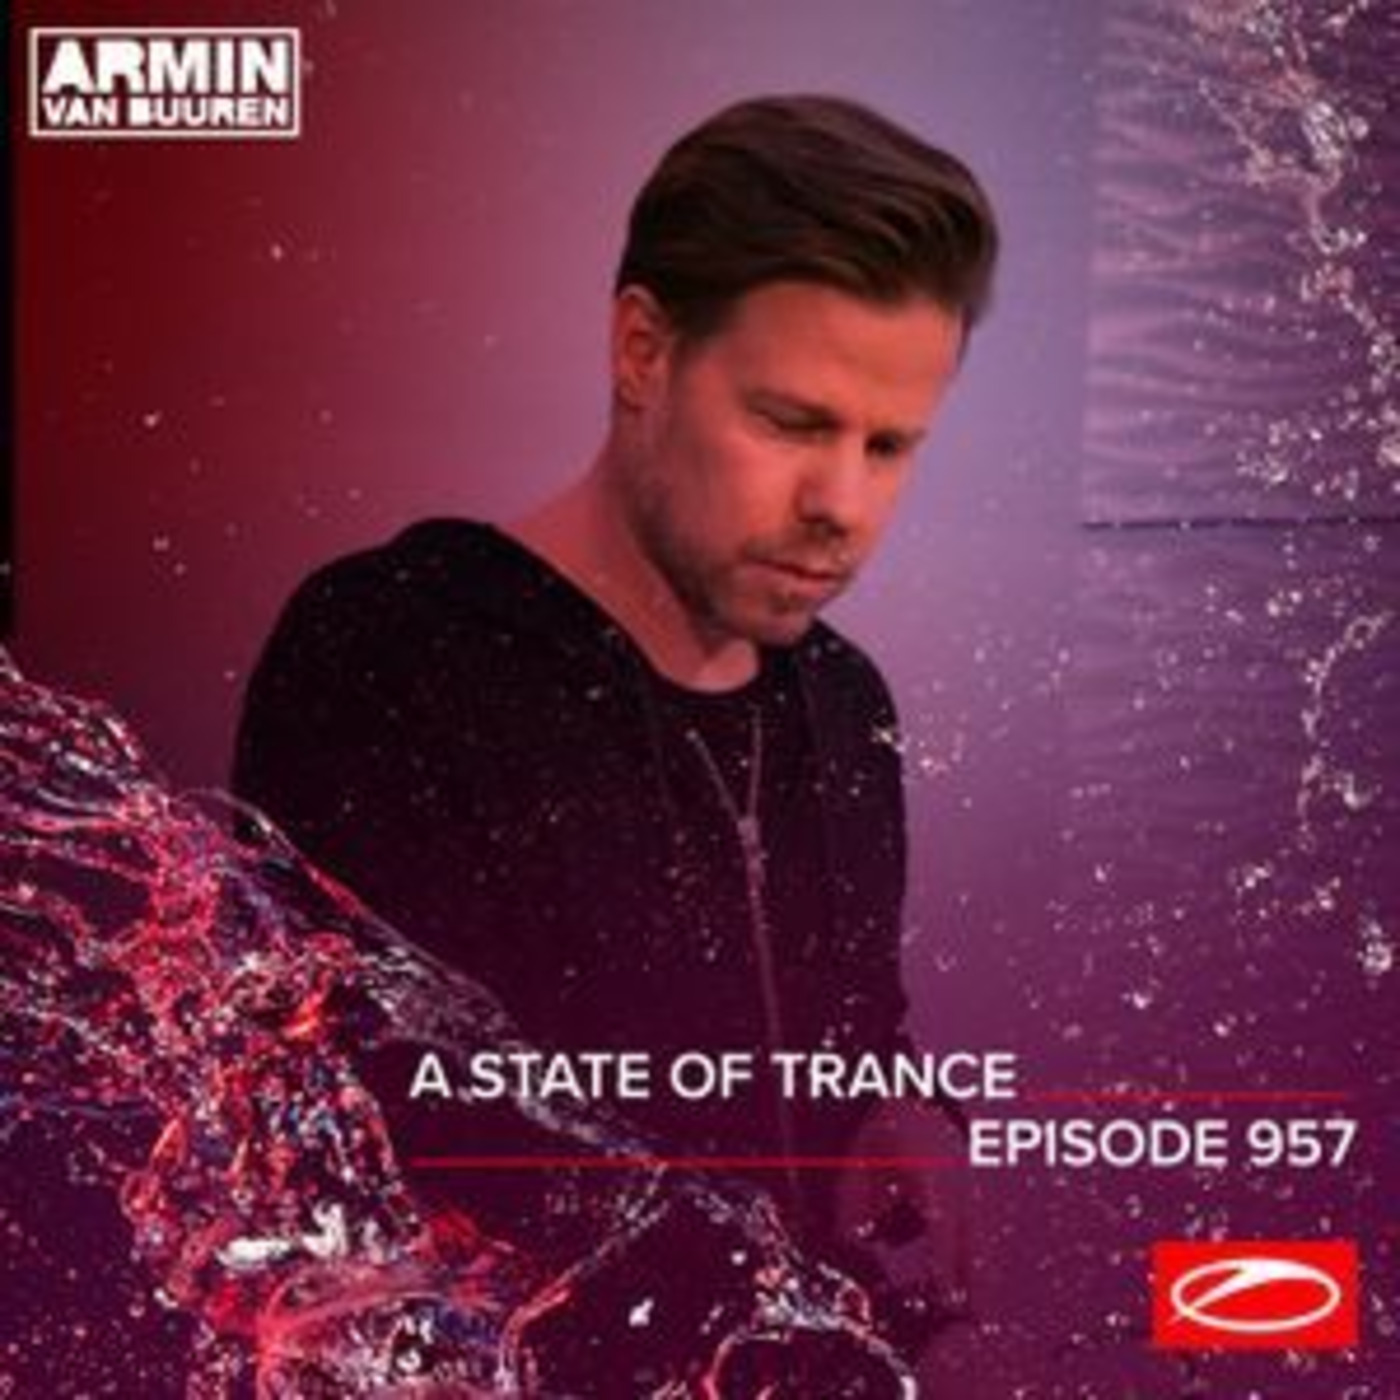 Armin van Buuren - A State of Trance 957: Hosted by Ferry Corsten & Ruben de Ronde (26.03.2020)